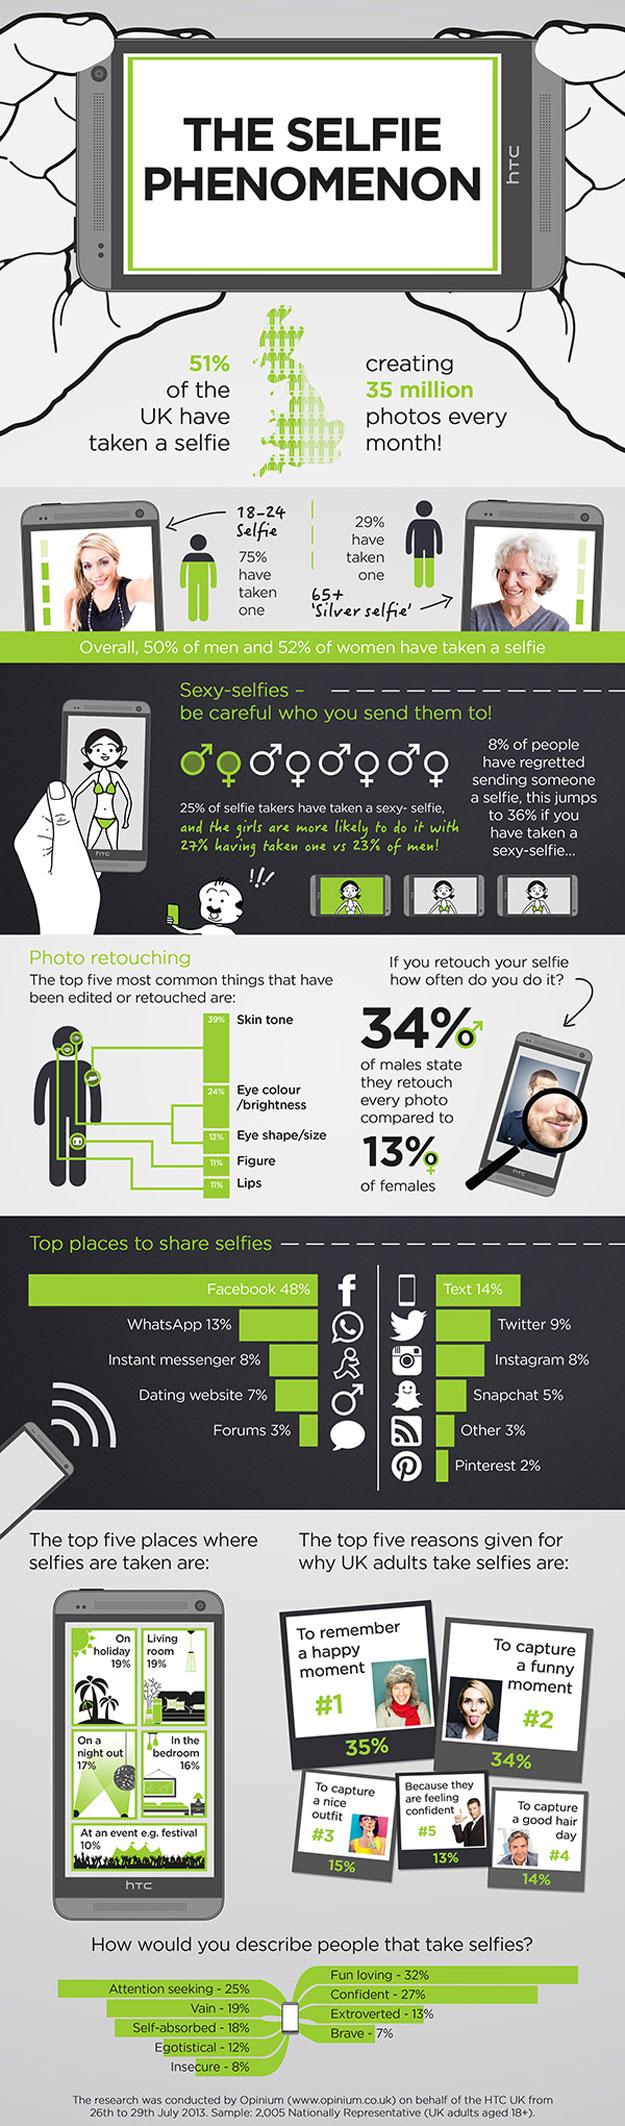 selfies-phenomenon-instagram-twitter-infographic